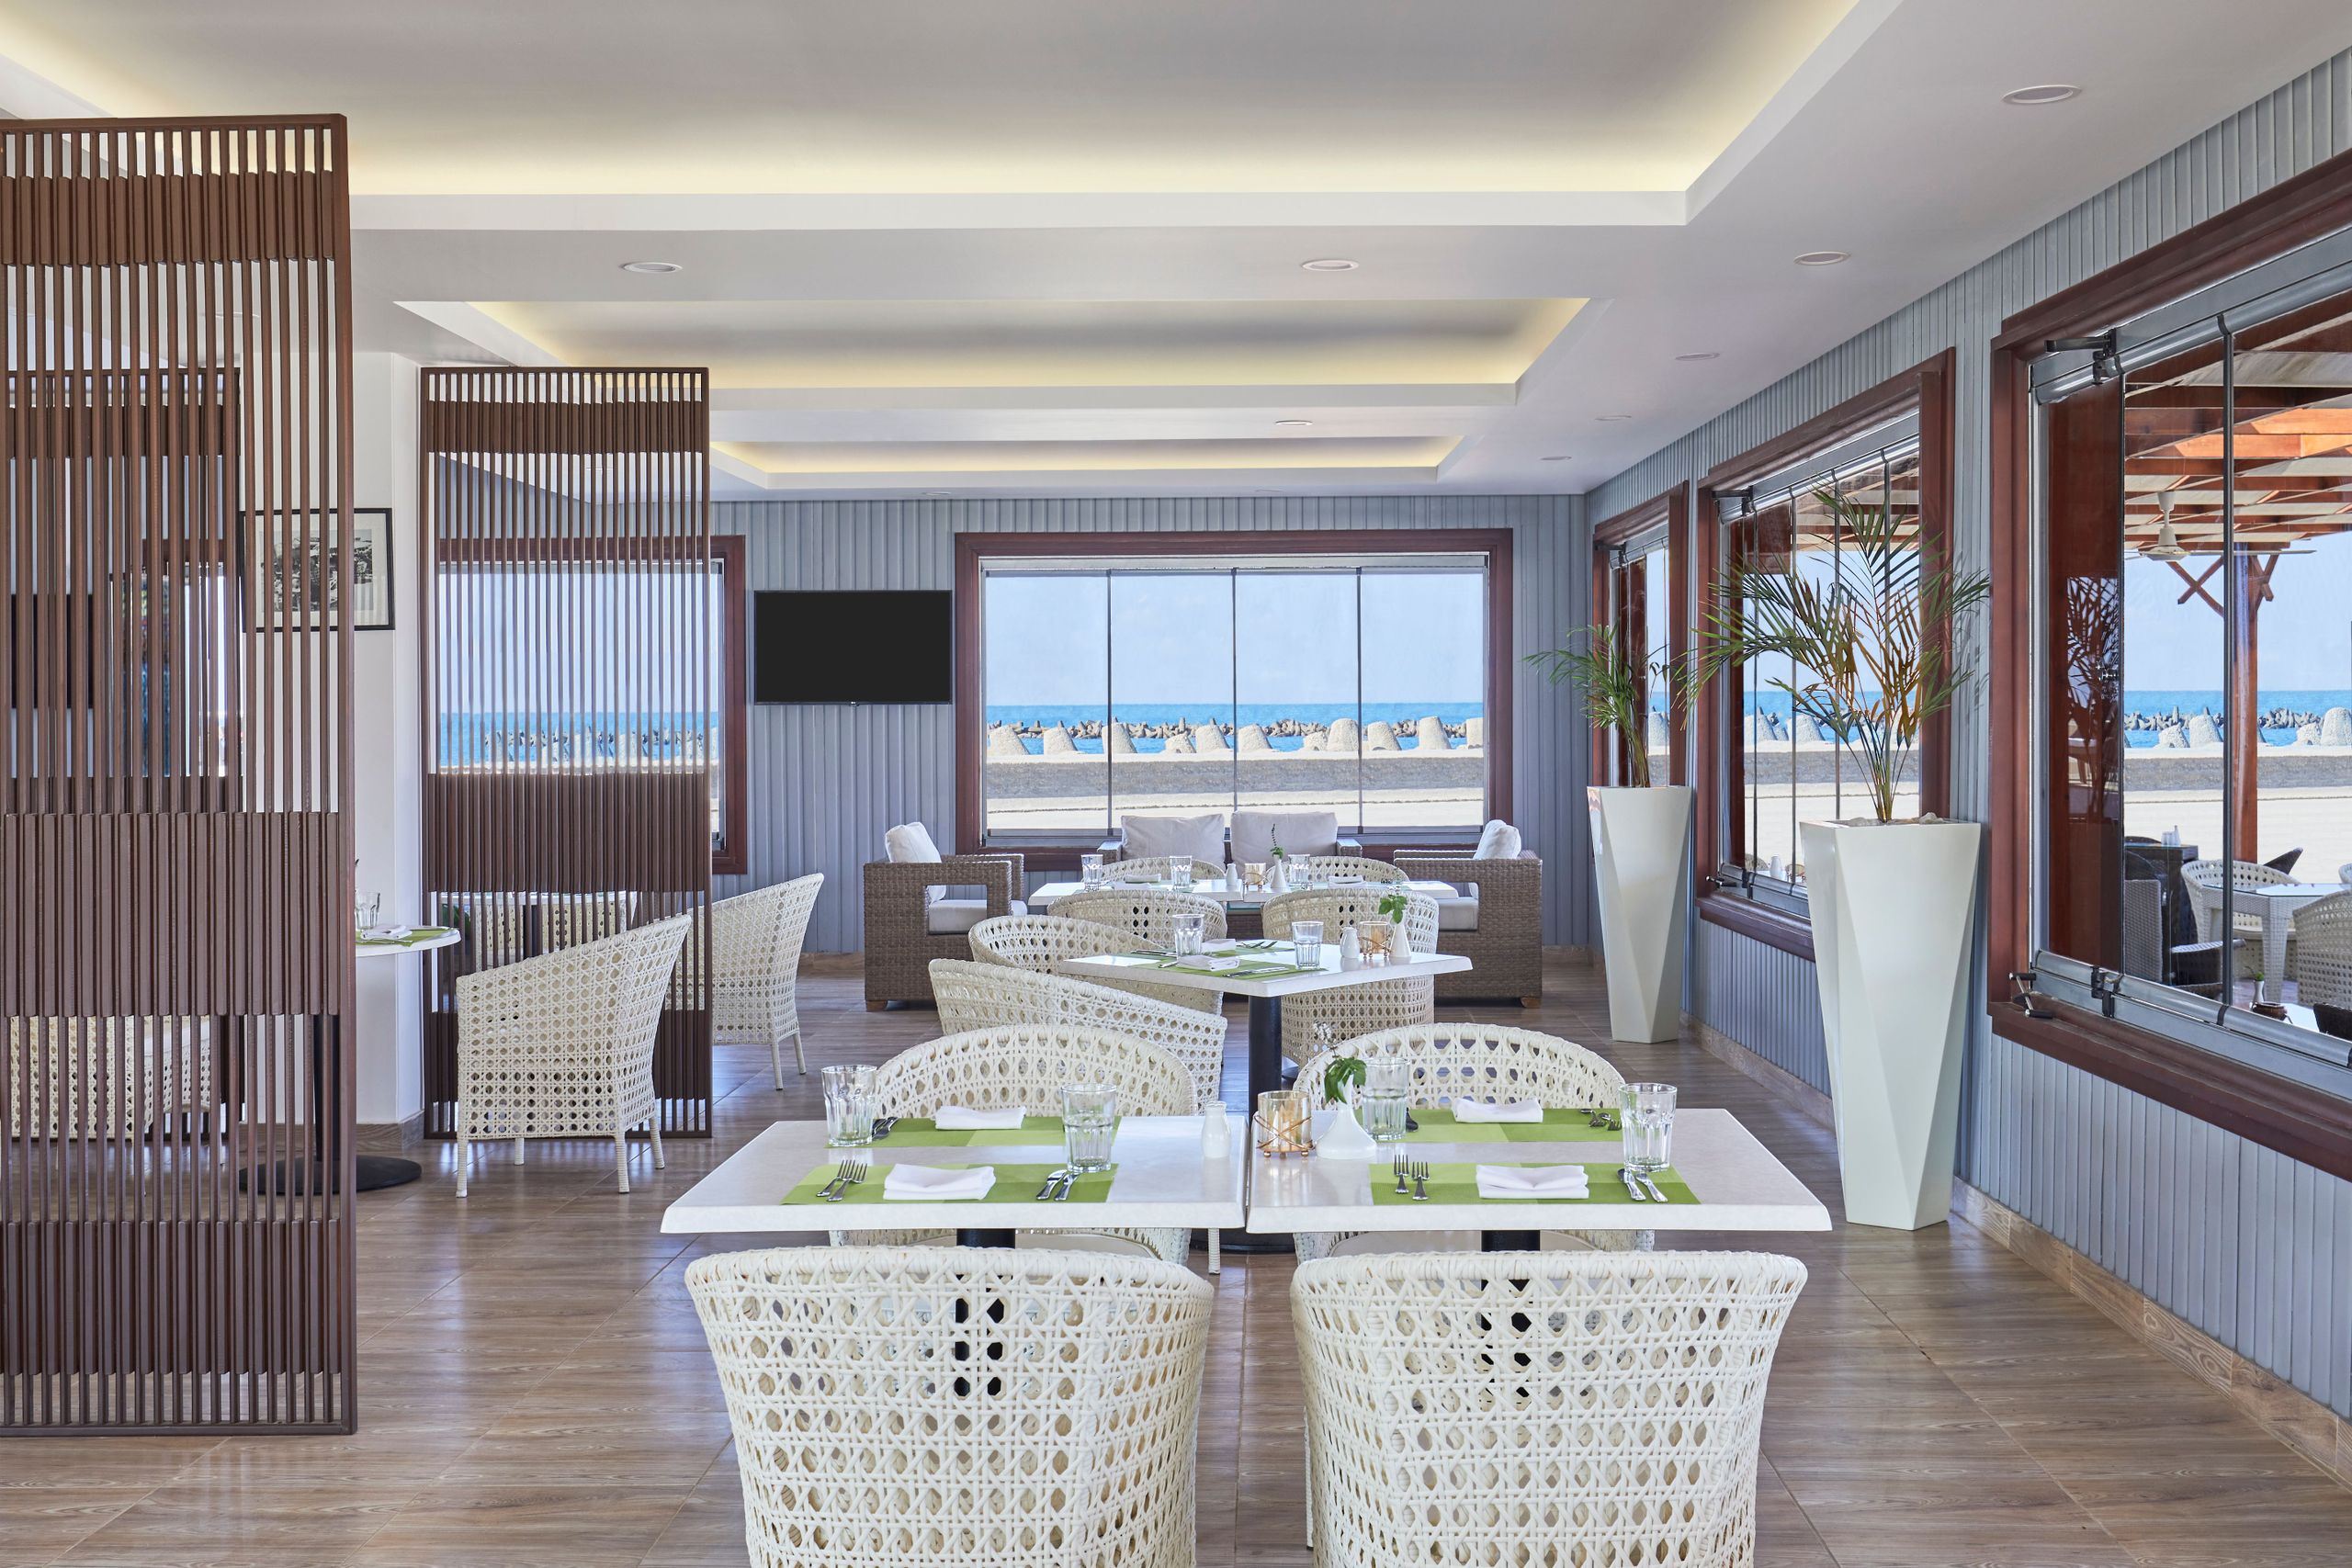 Steigenberger Hotel El Lessan, Ras El Bar, Egypt - Beach Restaurant